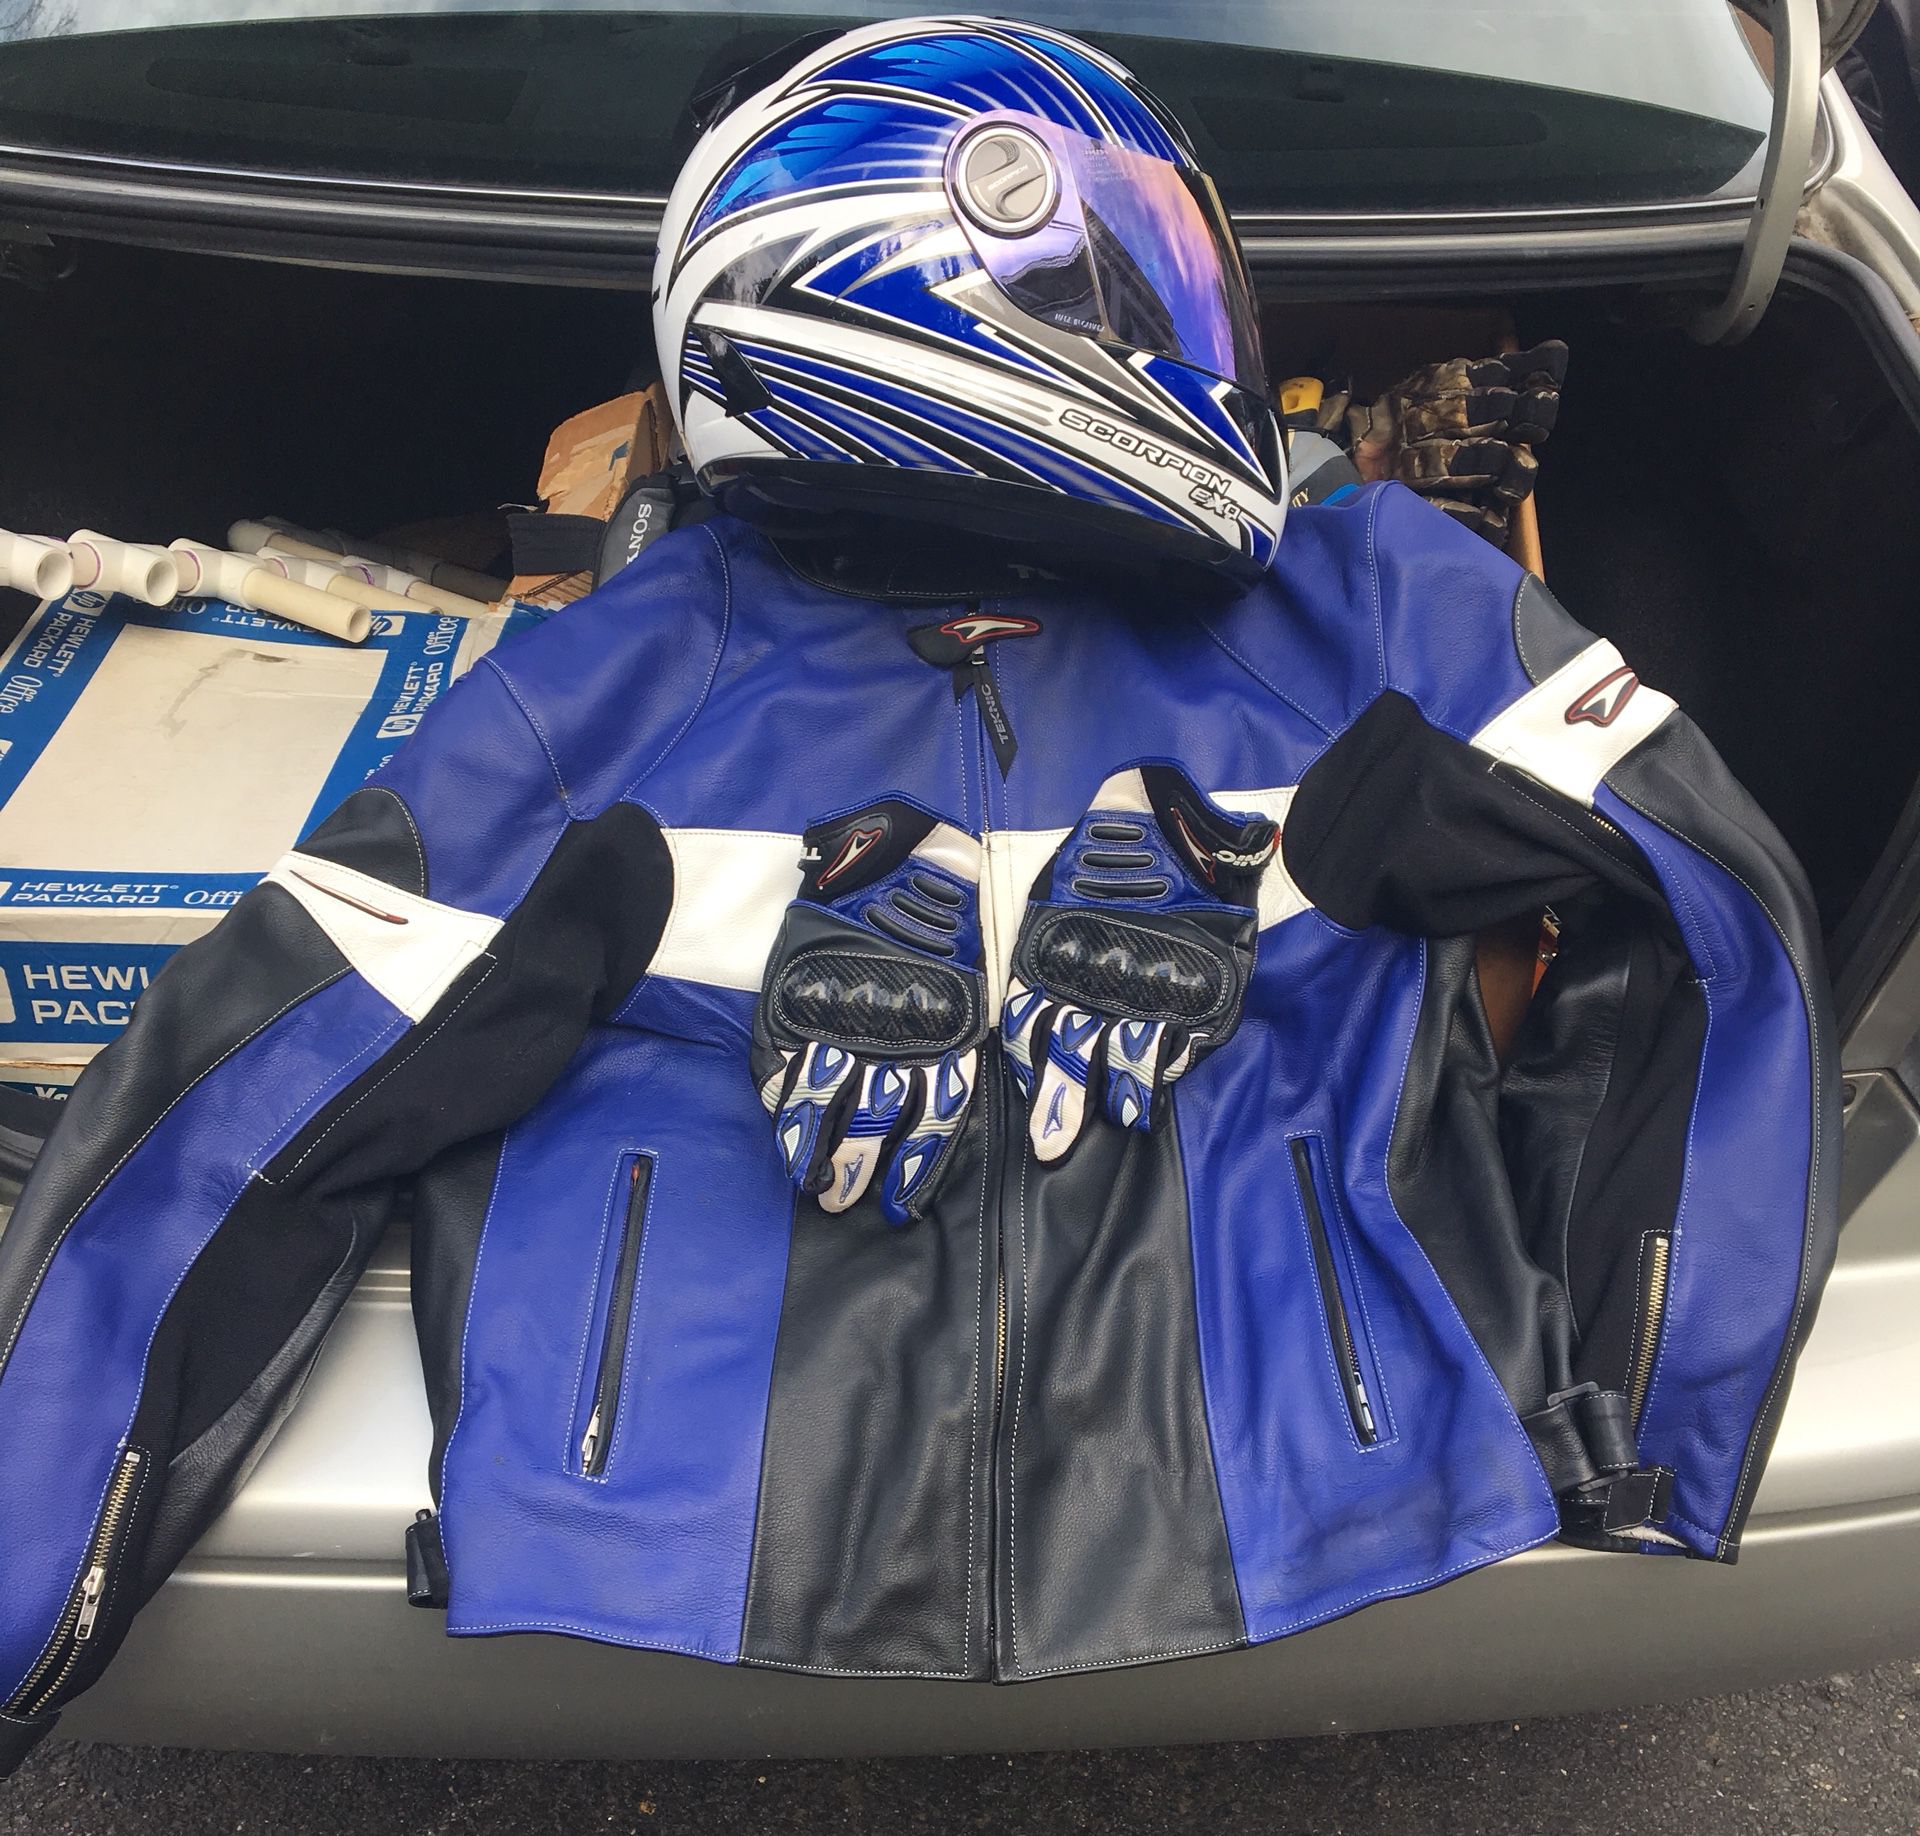 Teknic Jacket, Scorpion helmet and gloves